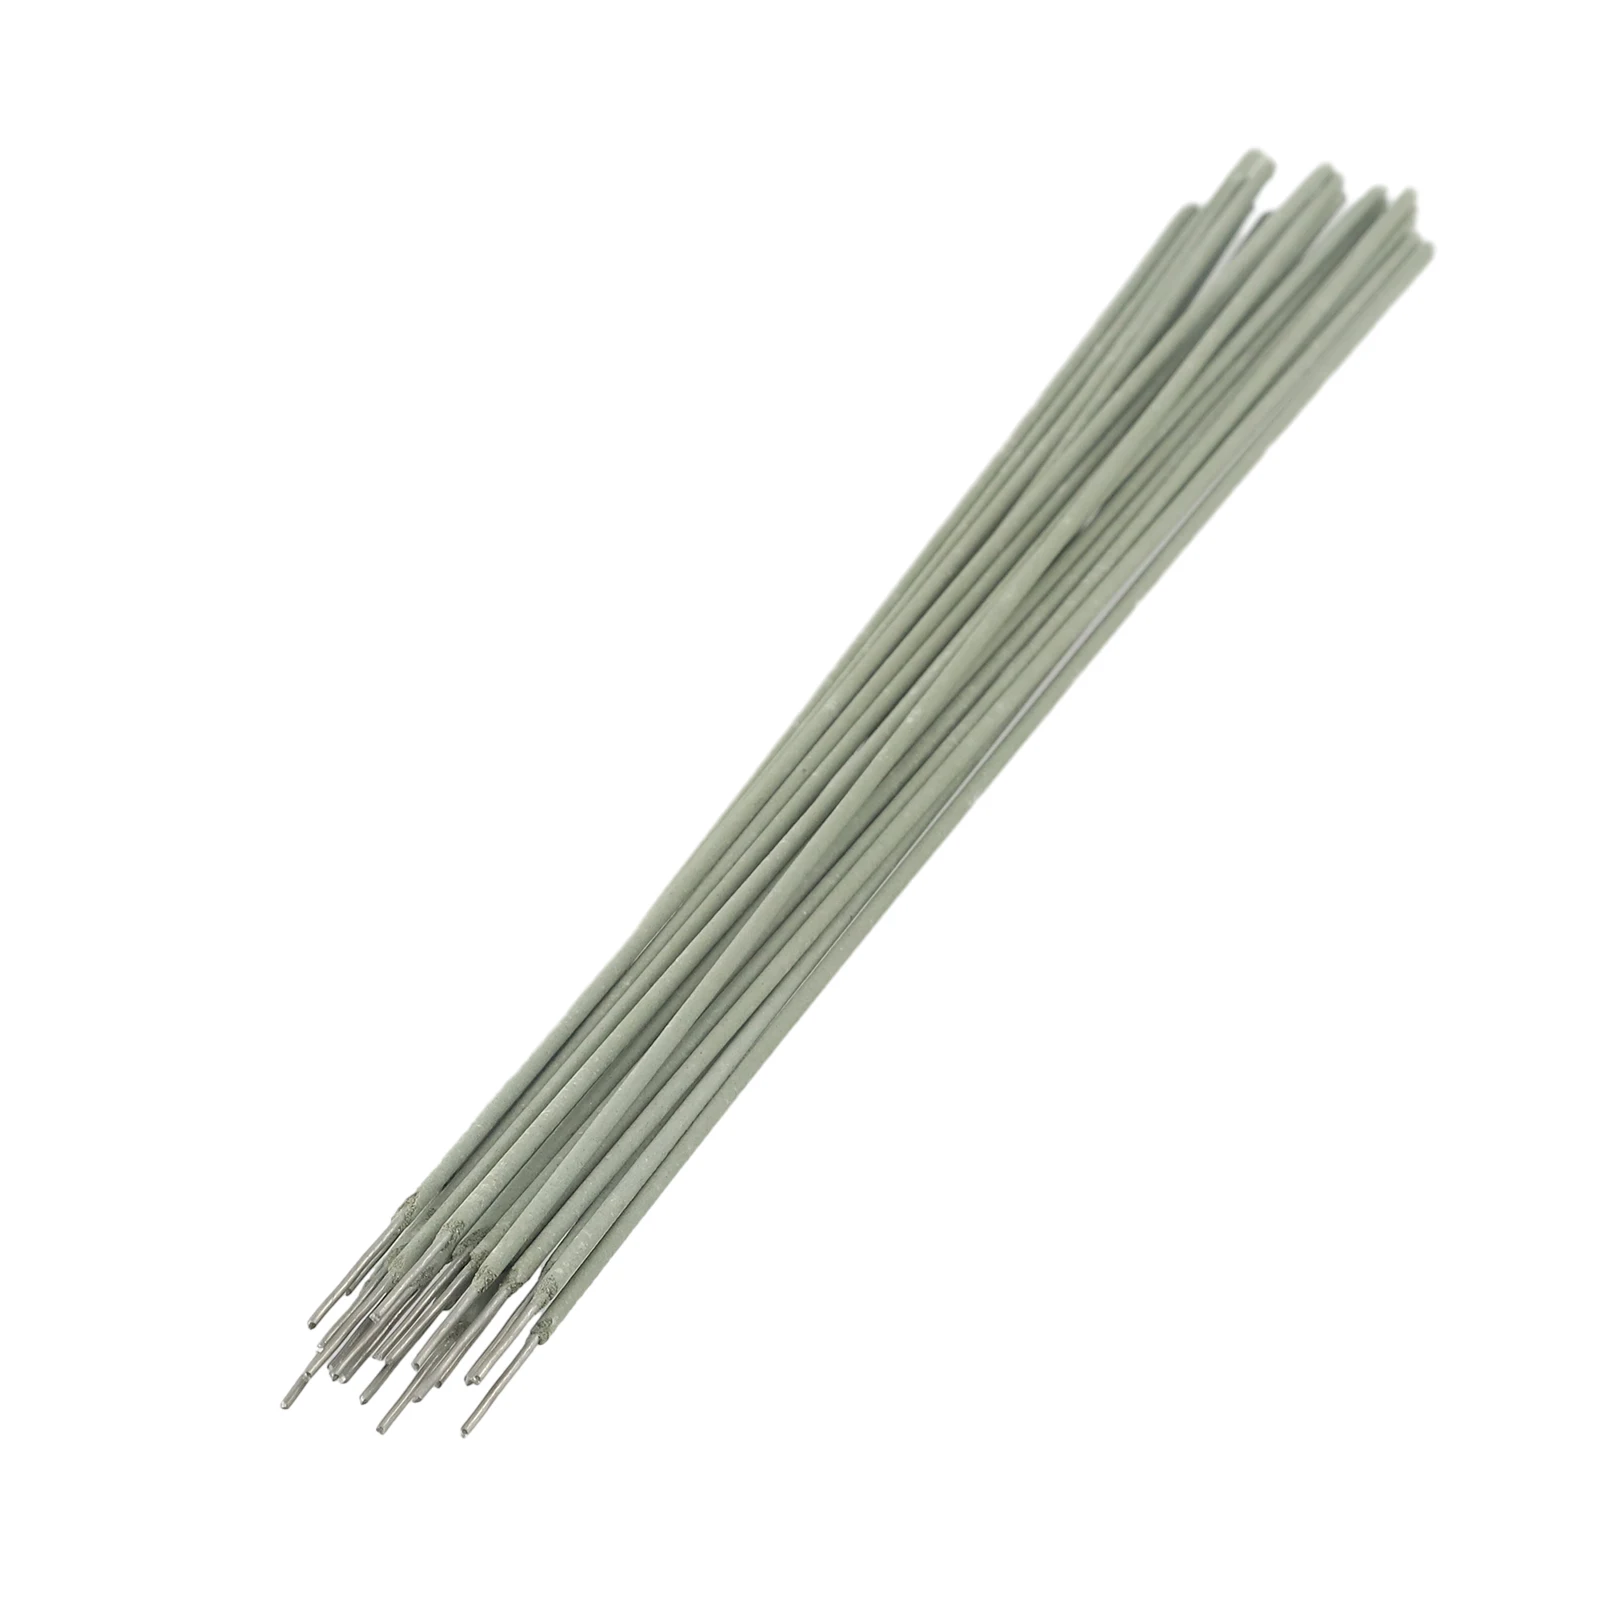 

Durable Hot Sale Quality Reliable Welding Rod A102 300℃ 20pcs Solder 1.0mm-4.0mm 201/202/301/302/304 Electrode